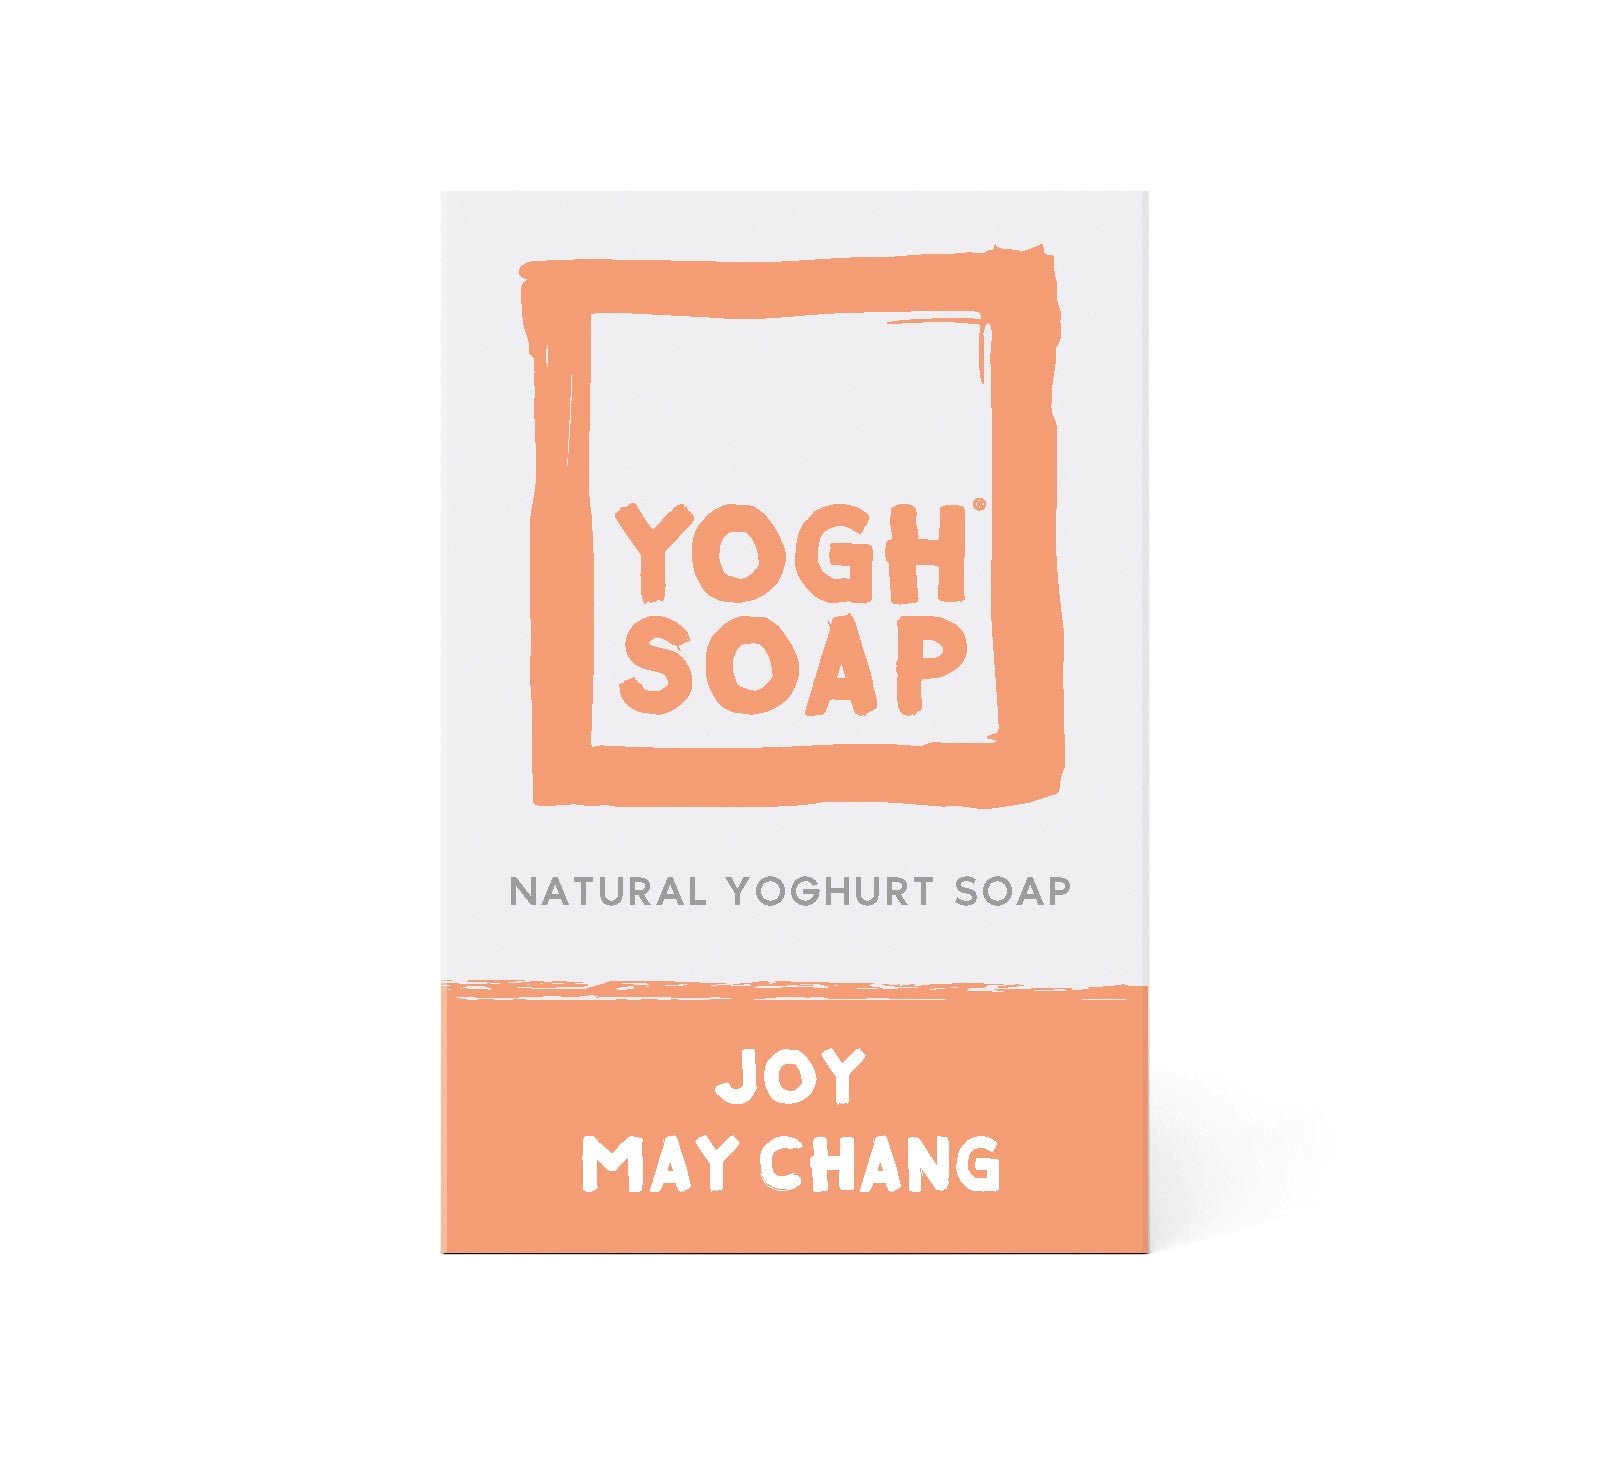 YOGHSOAP® Joy Mei Chang, 100g.